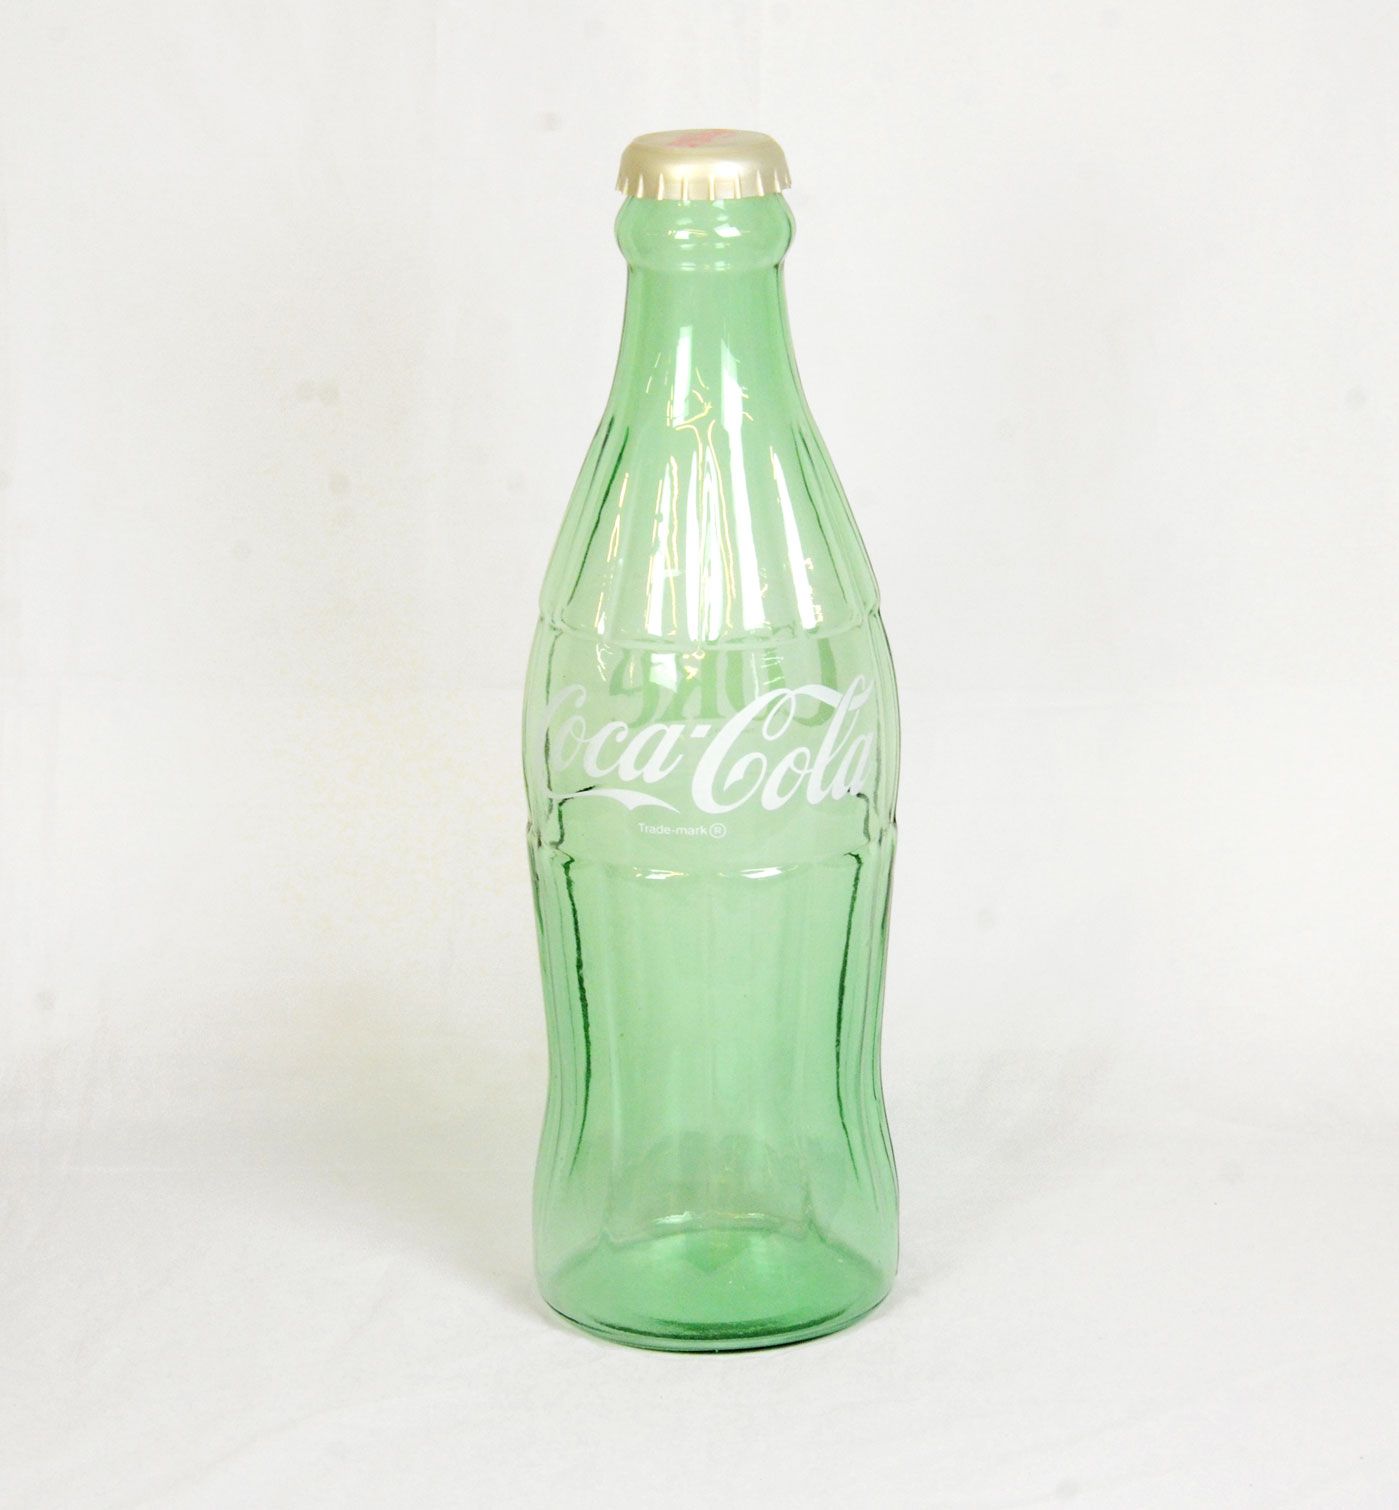 Huge glass Coca-Cola bottle